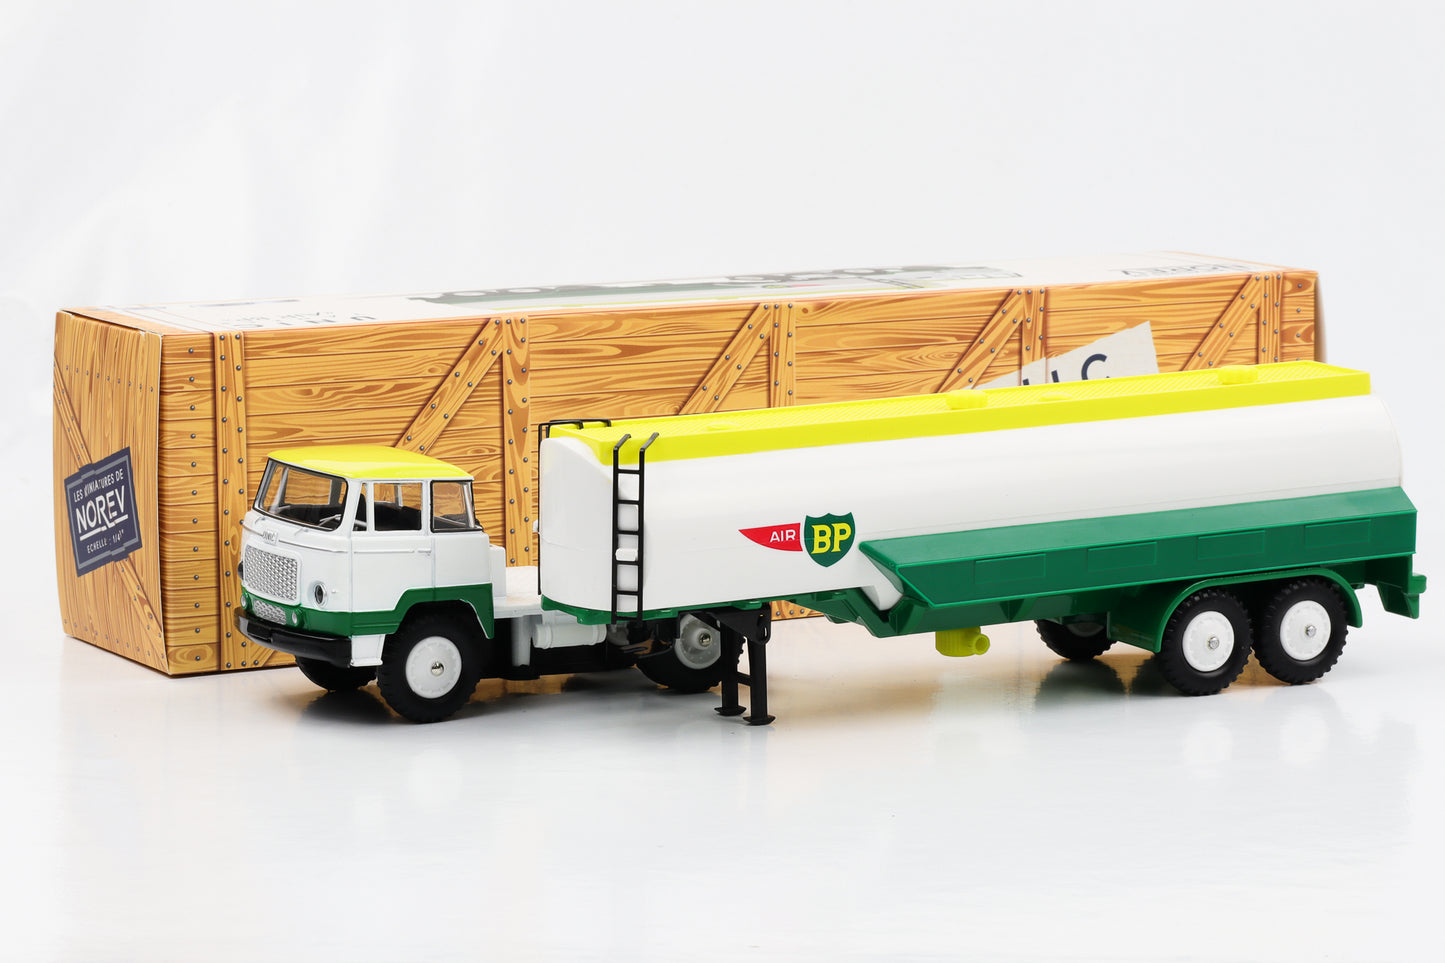 1:43 Unic Esterel شاحنة ناقلة Air BP باللون الأبيض والأصفر والأخضر Norev diecast